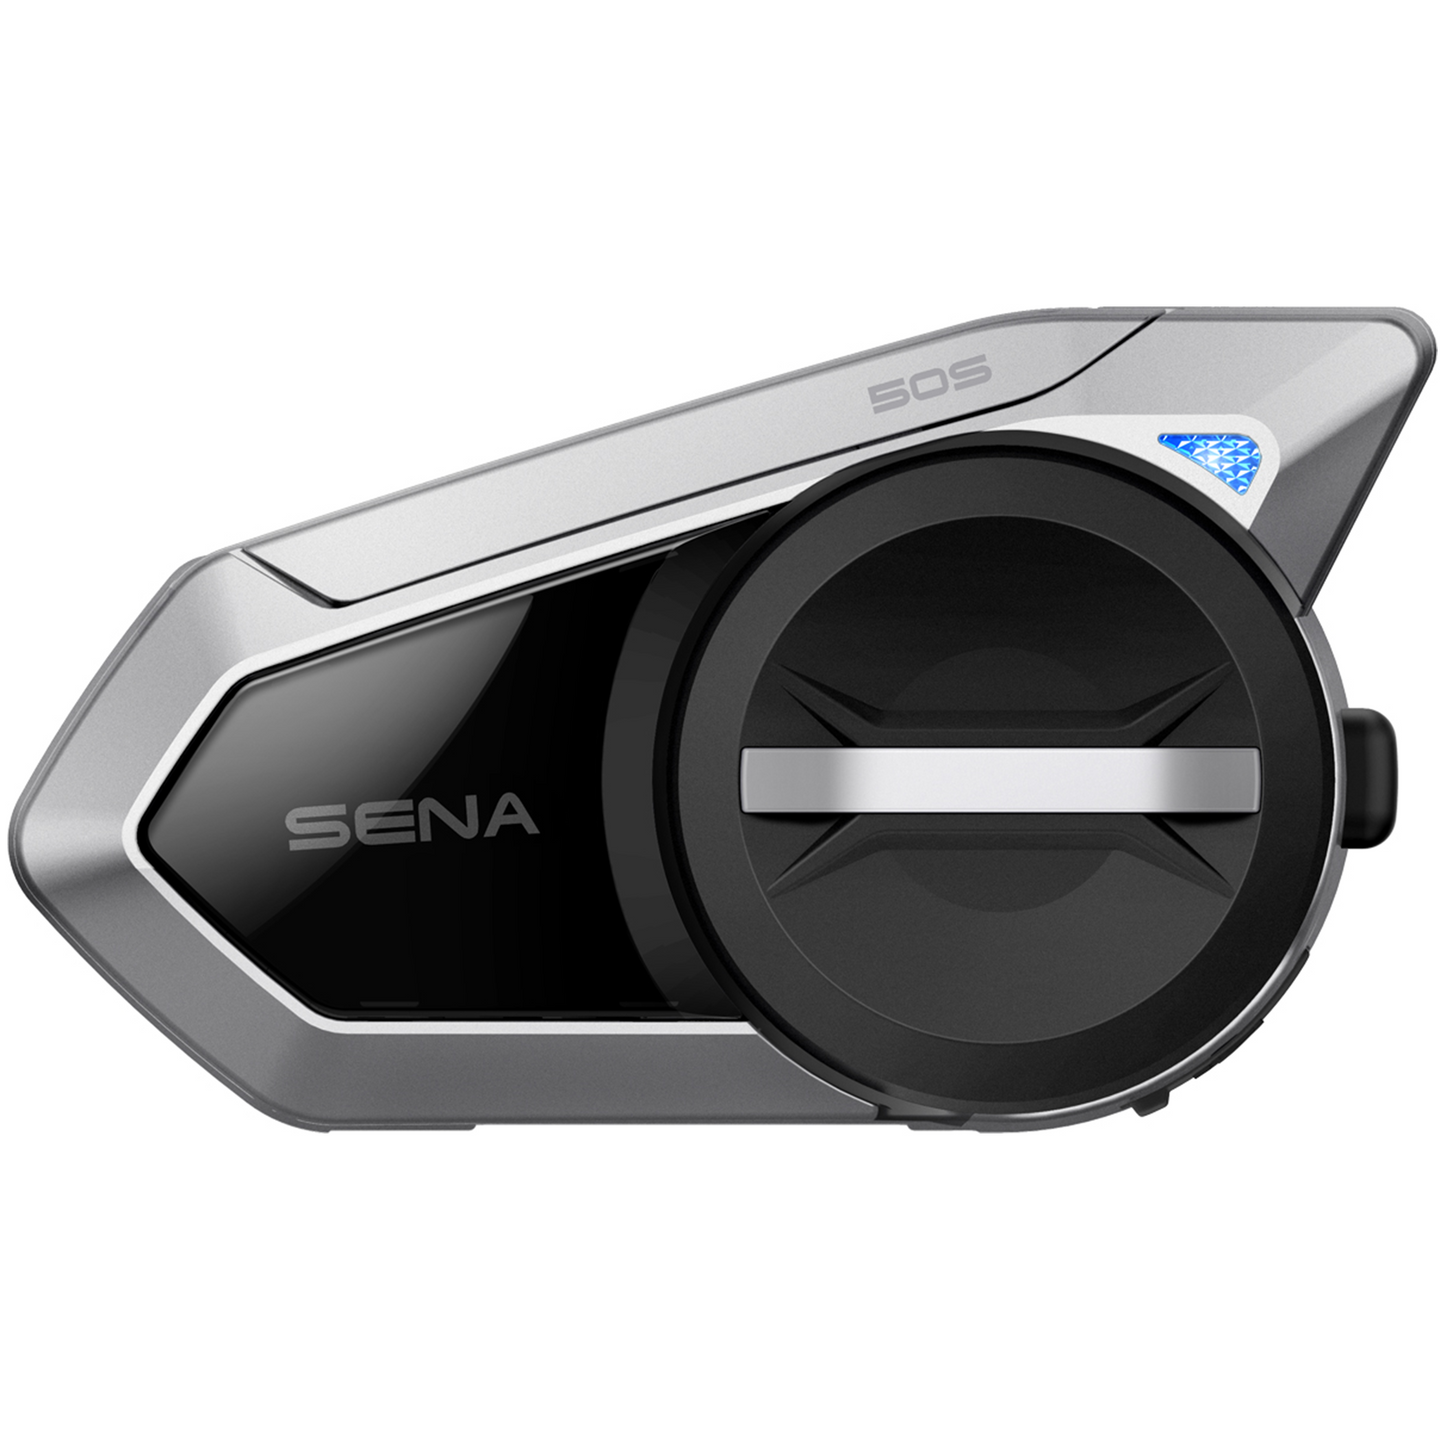 Sena Motorcycle Bluetooth Communication System 50S-01